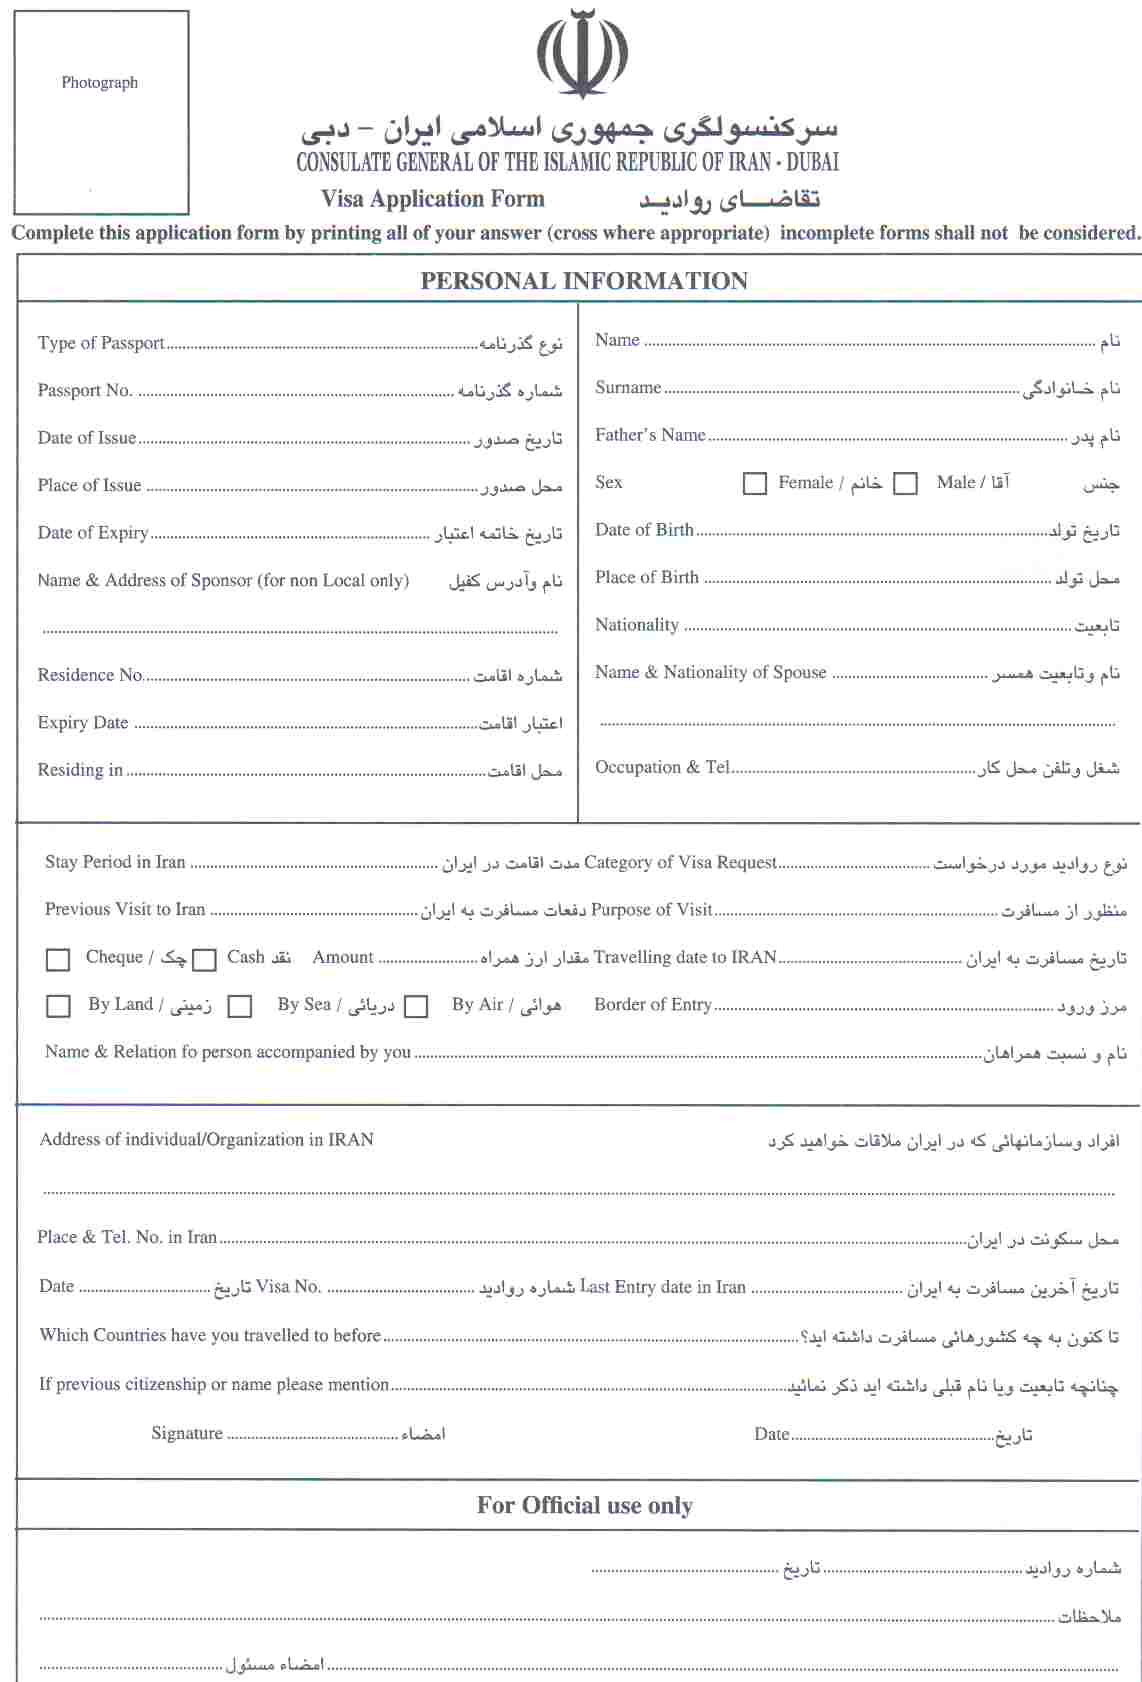 Us Embassy In Tanzania Visa Application Form United States Manuals 